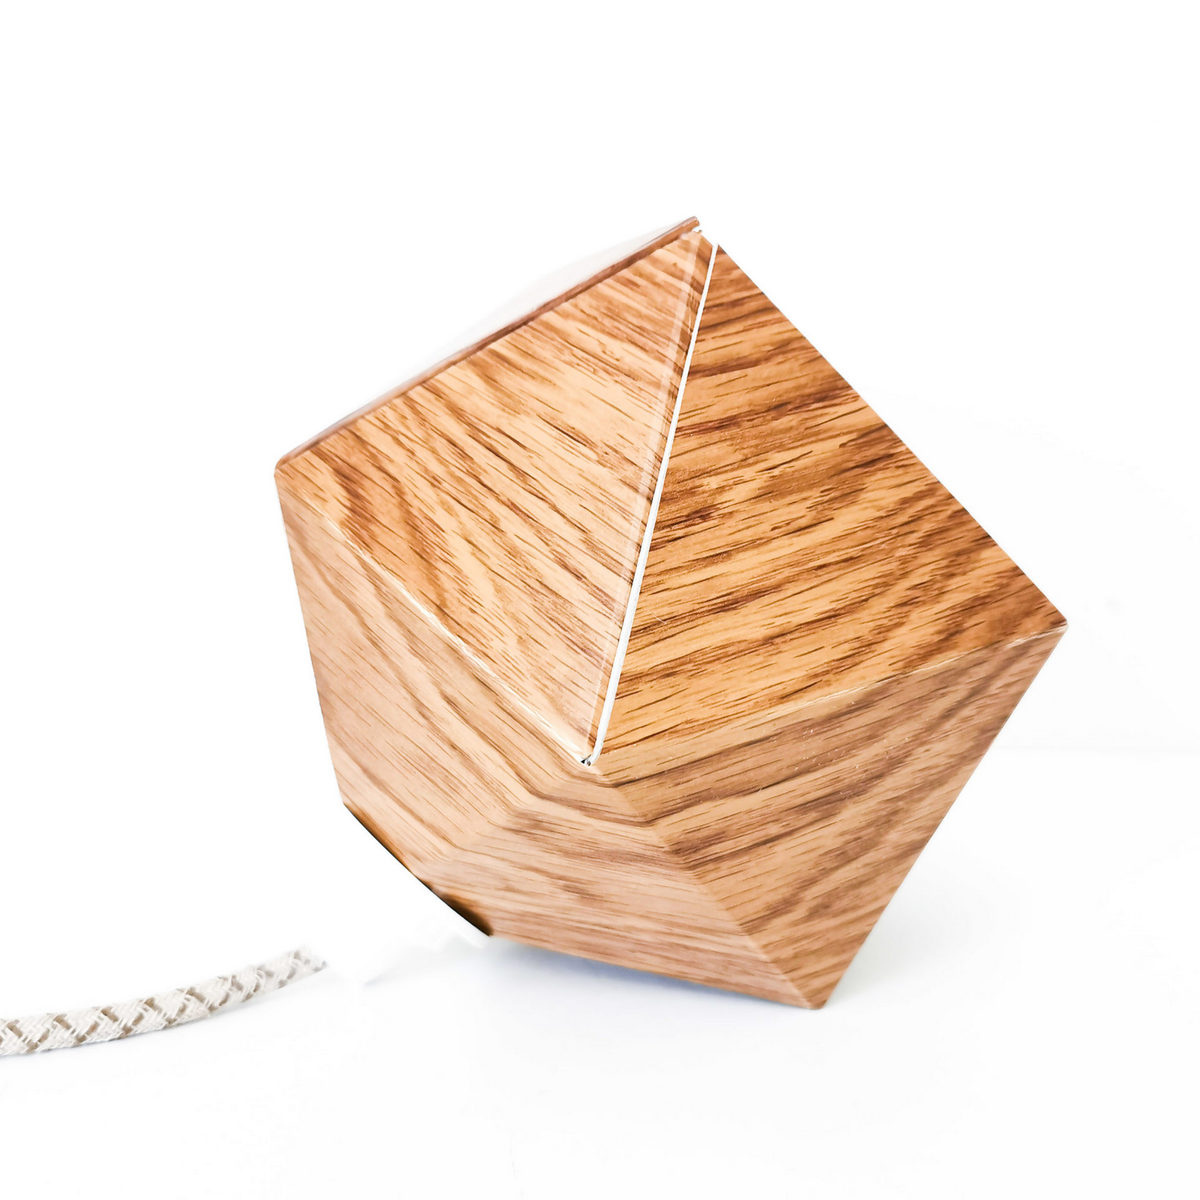 leewalia lampe origami en chene made in france une idee cadeau chez ugo et lea (6)